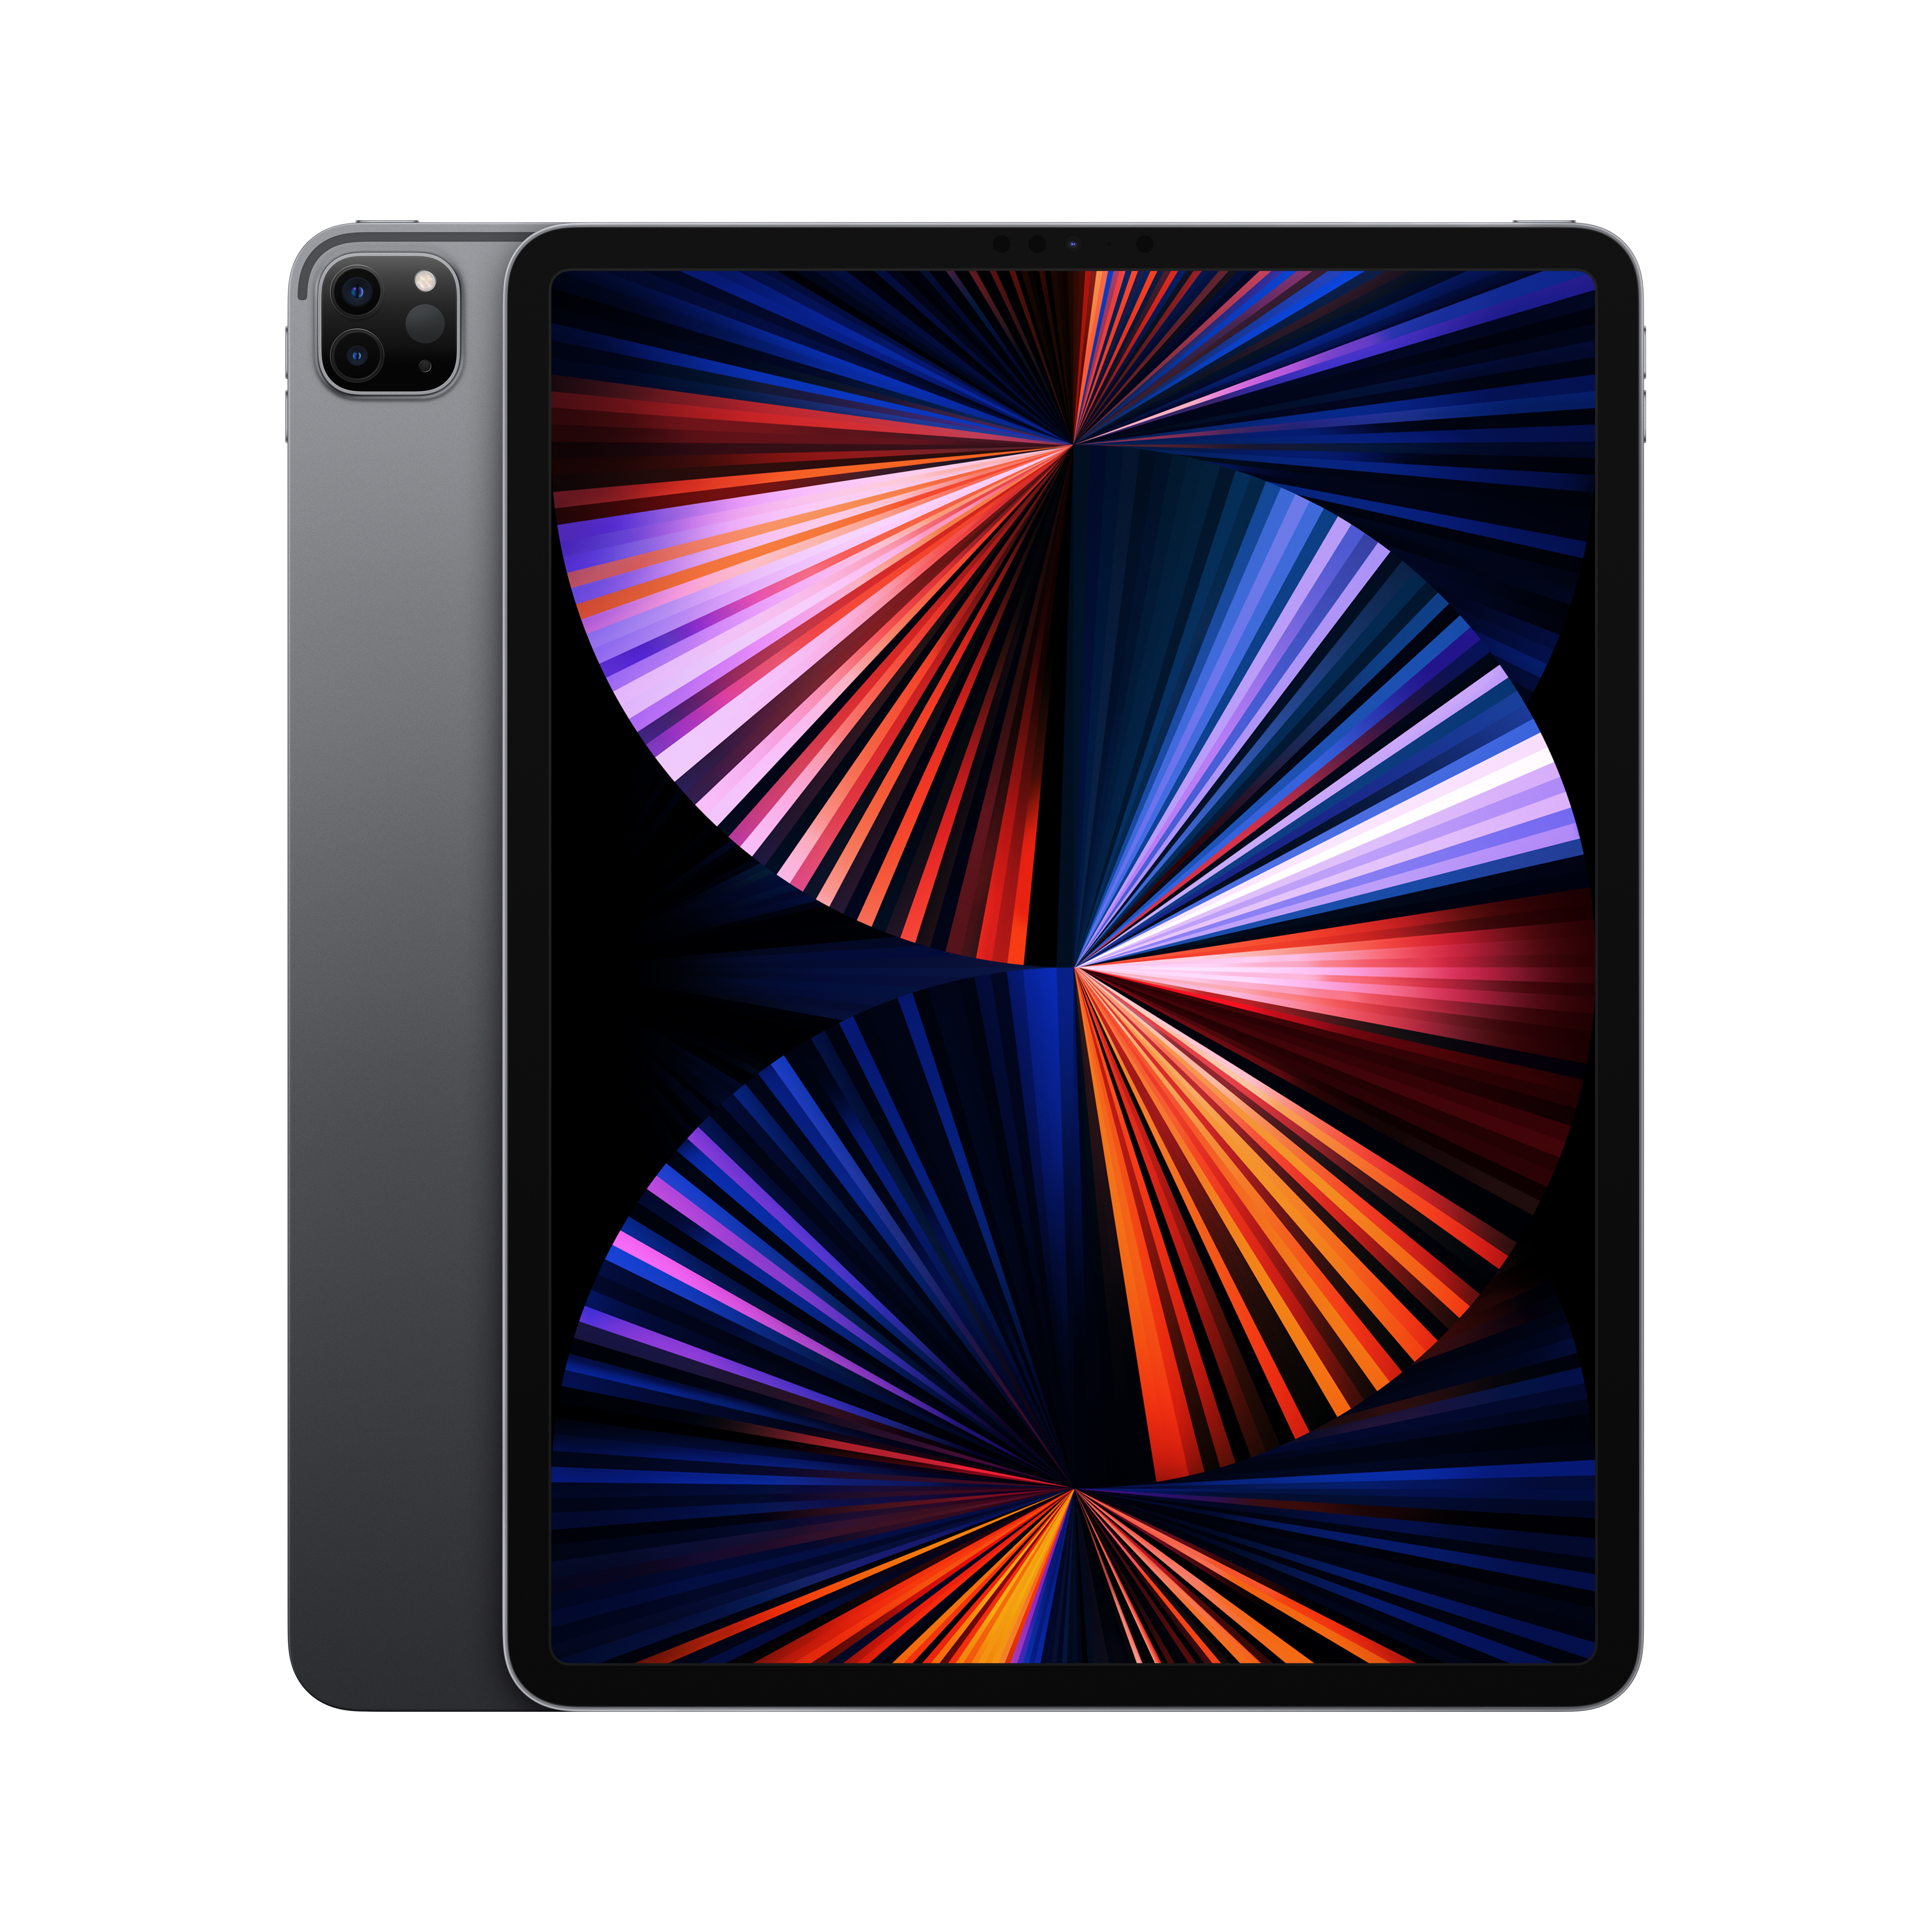 2021 Apple 12.9-inch iPad Pro Wi-Fi 128GB - Space Gray (5th Generation) - image 1 of 9